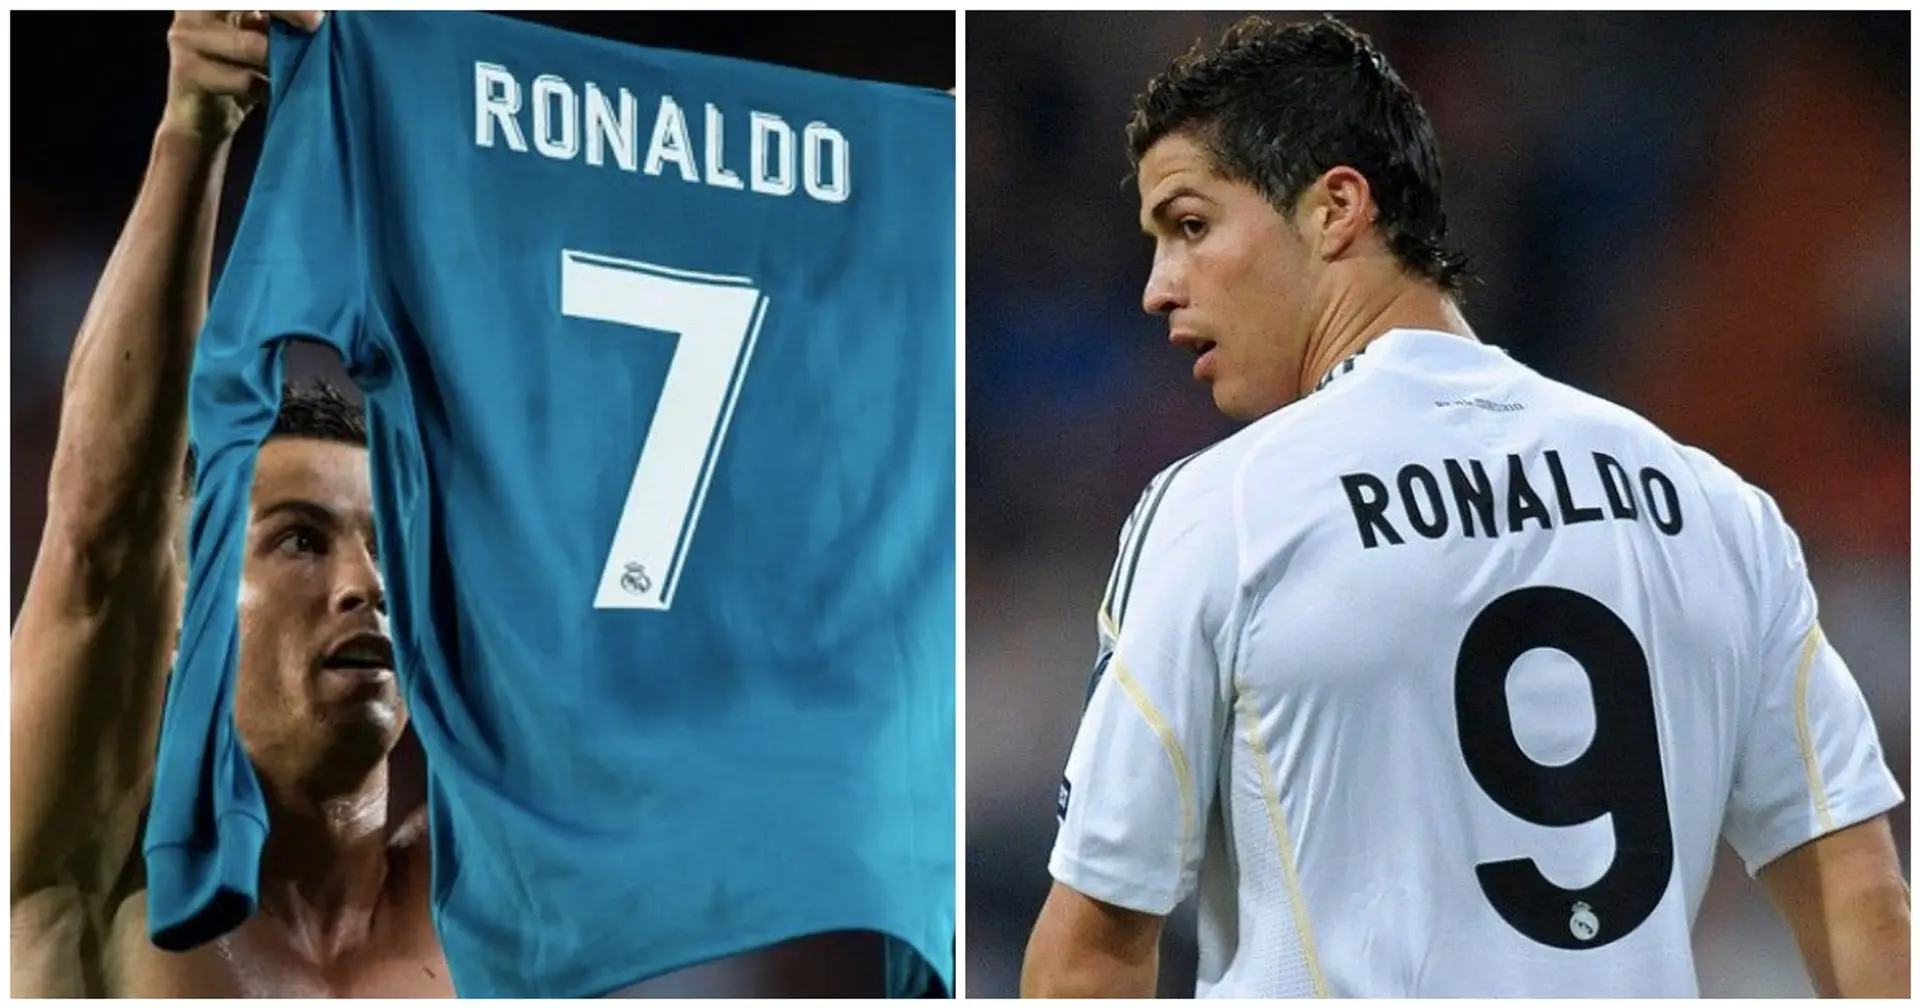 Pourquoi le Real Madrid ne retirera jamais les numéros de maillot de Ronaldo - explication